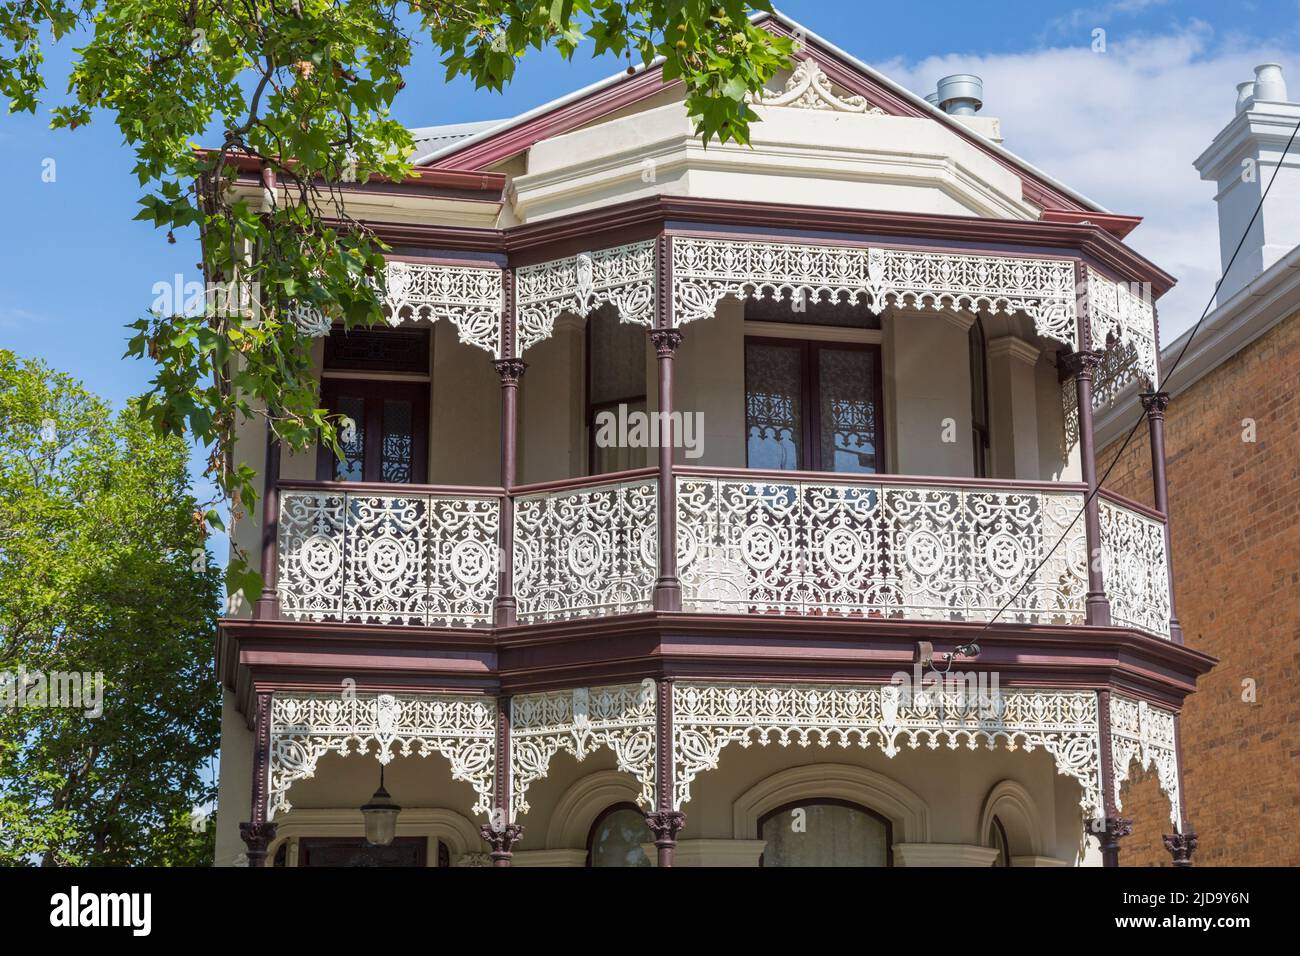 Wrought iron work on balcony of house in Flemington, Melbourne, Victoria, Australia. Stock Photo